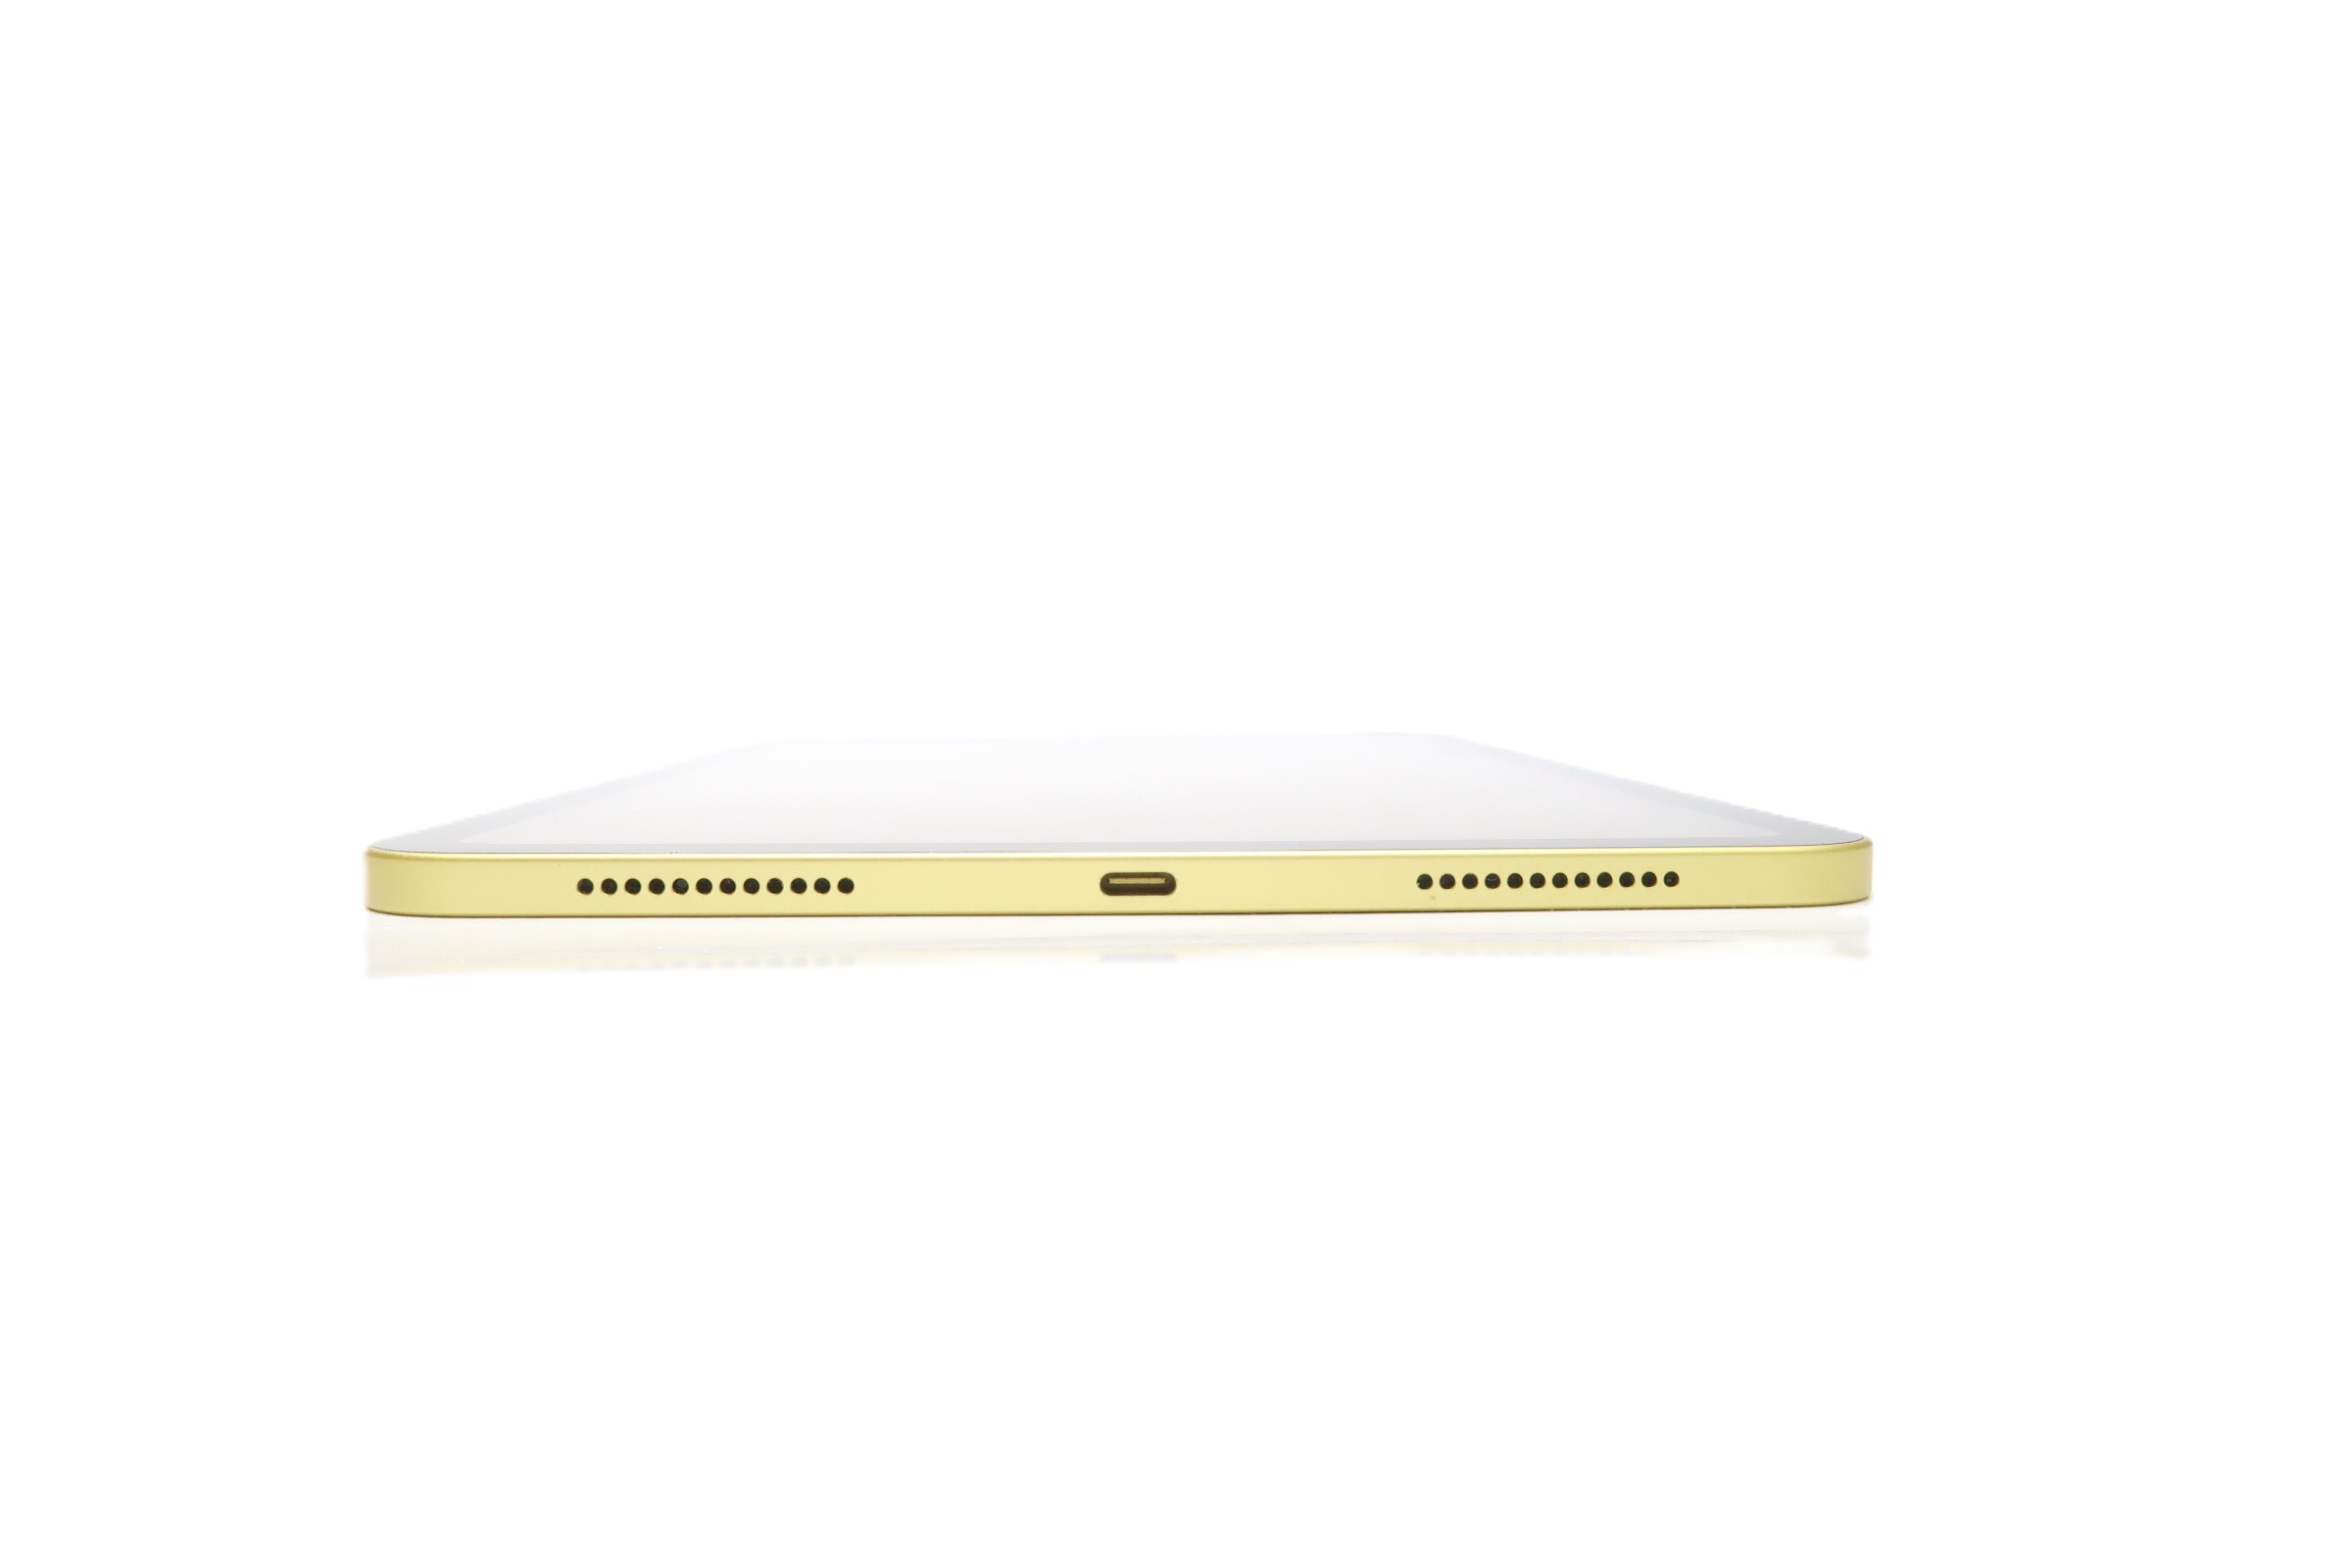 Apple 10.9-Inch iPad Latest Model (10th Generation) with Wi-Fi 64GB Yellow  MPQ23LL/A - Best Buy